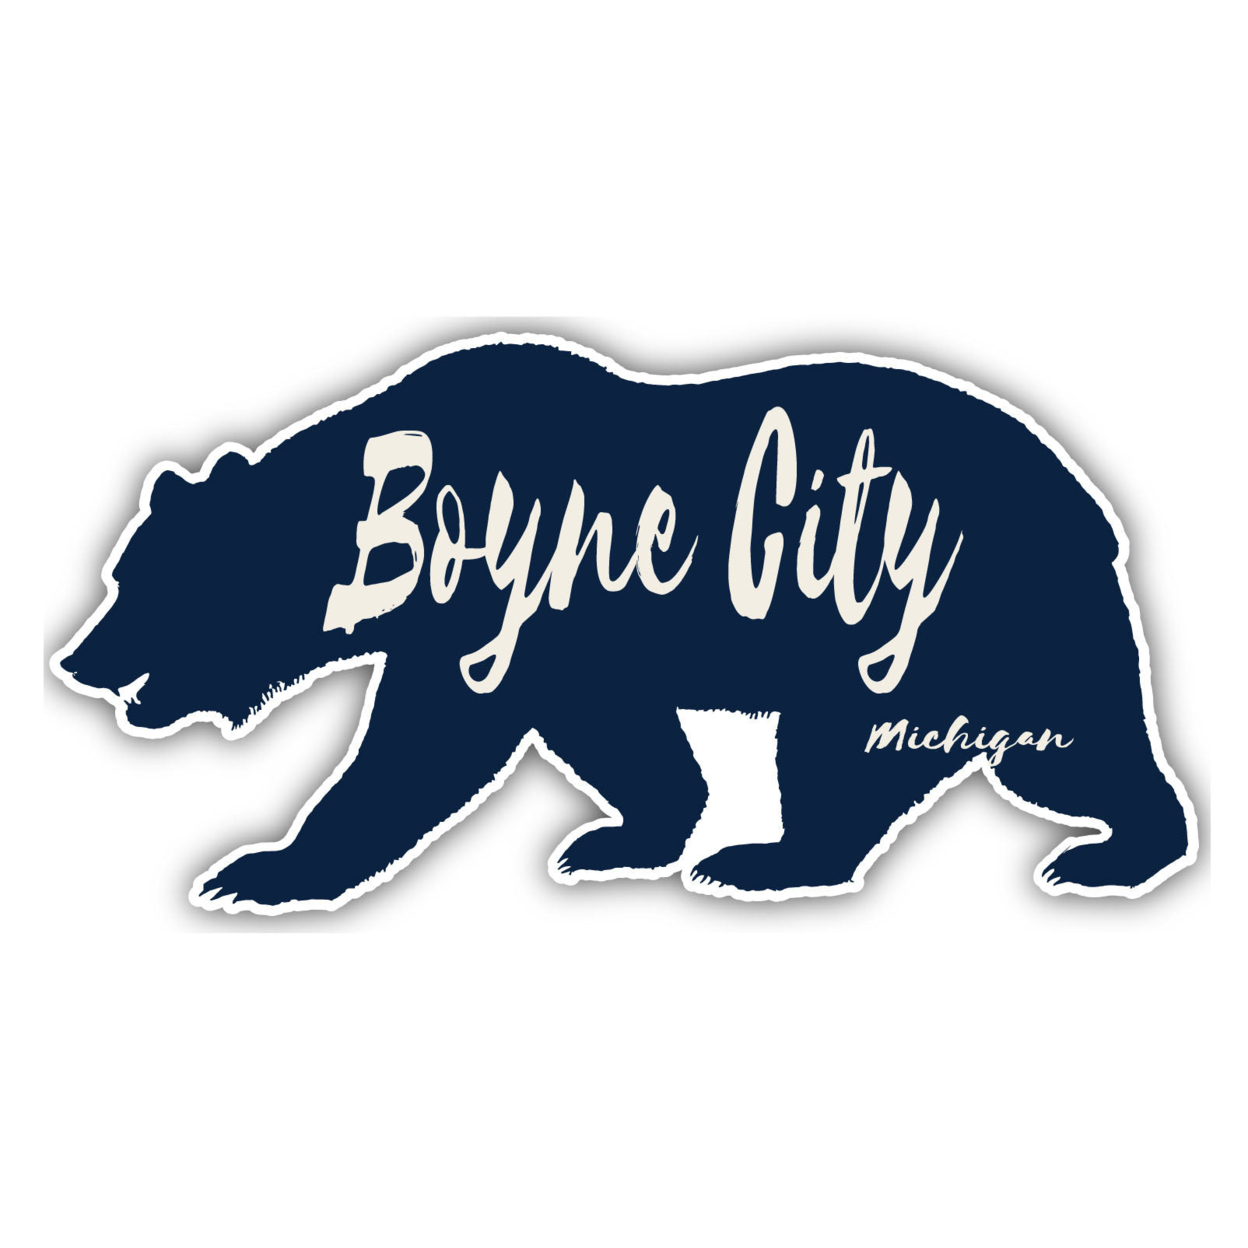 Boyne City Michigan Souvenir Decorative Stickers (Choose Theme And Size) - Single Unit, 2-Inch, Adventures Awaits